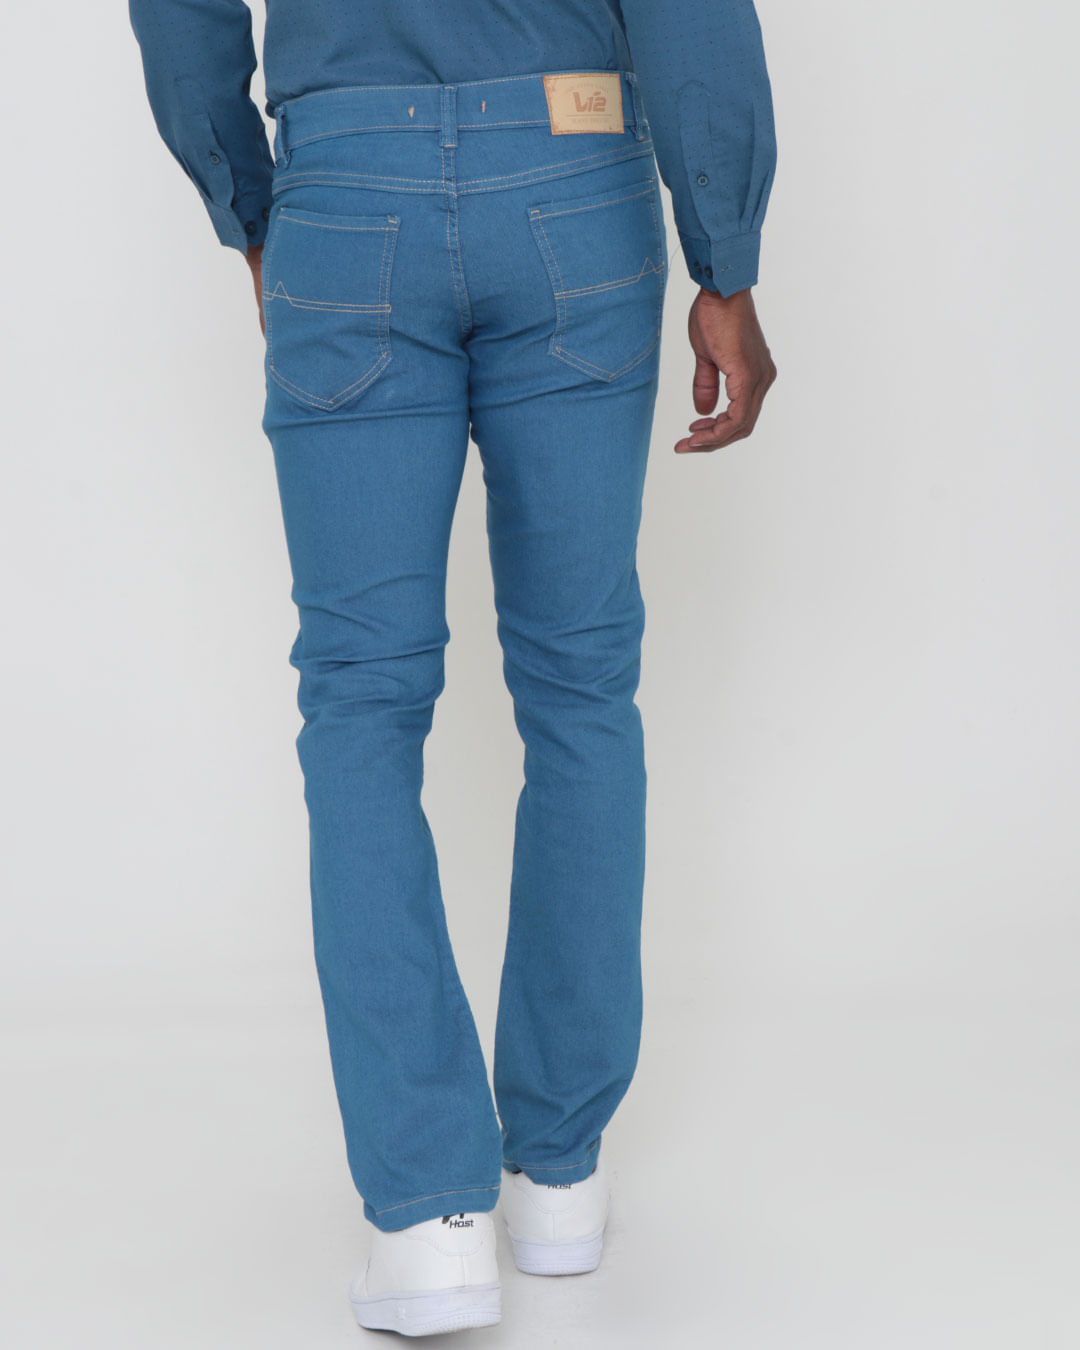 Calca-Jeans-Masculina-Basica-Reta-Azul-Claro-